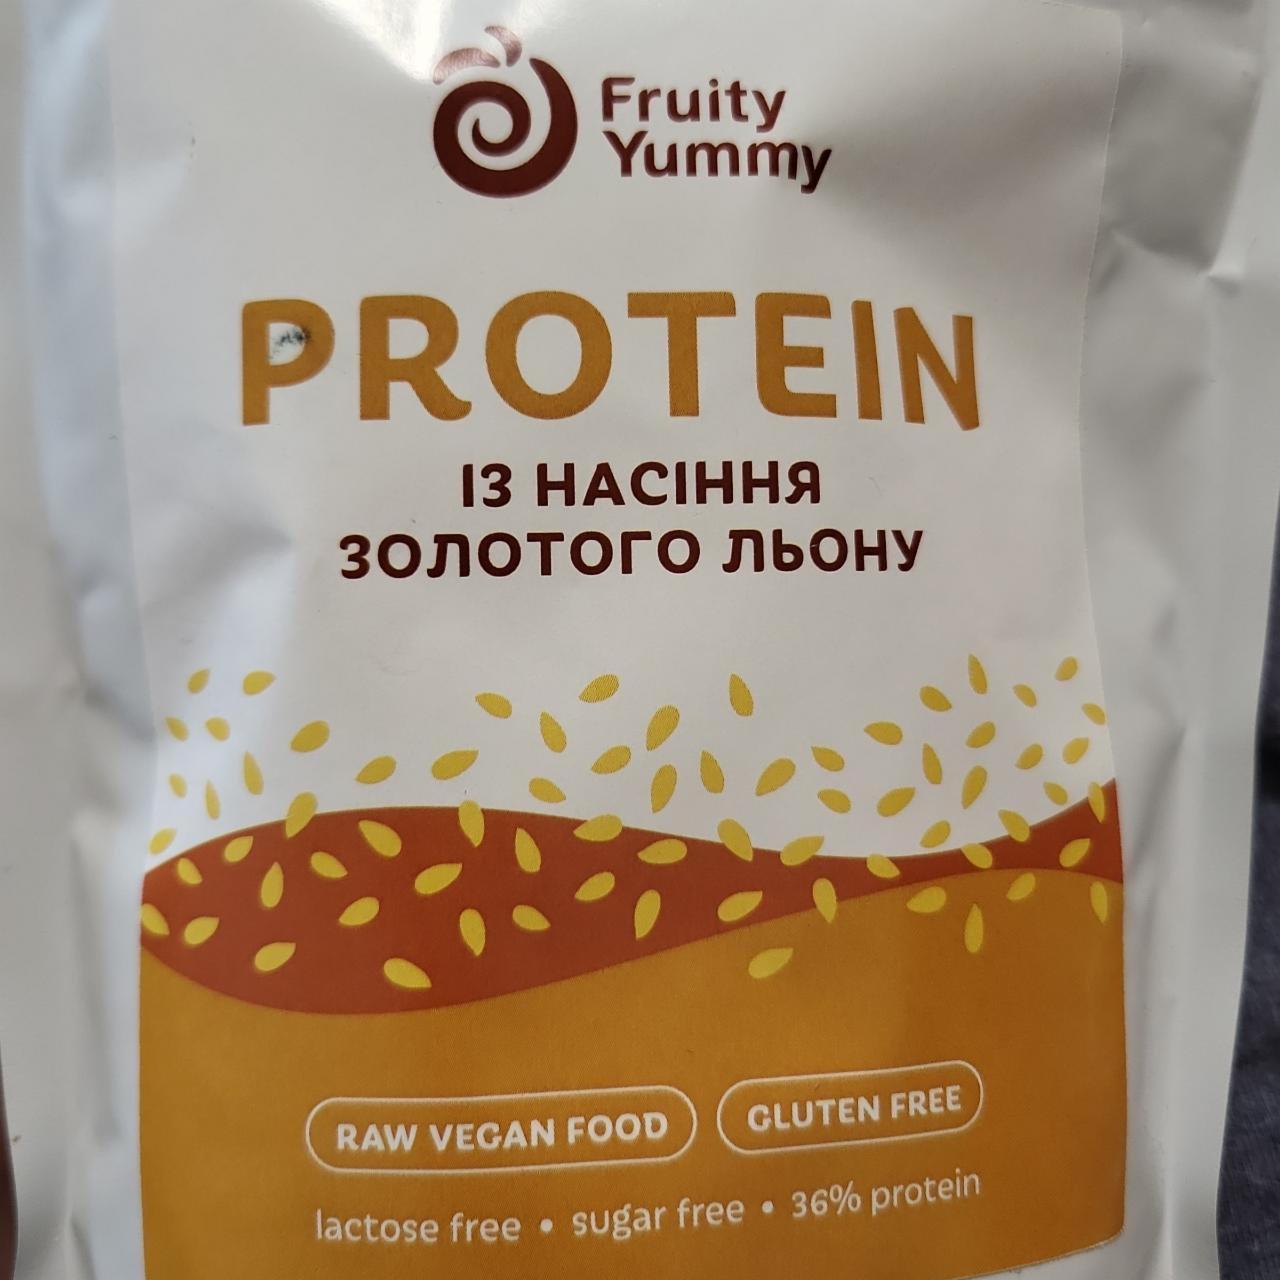 Фото - Протеин из семян золотого льна Protein Fruity Yummy